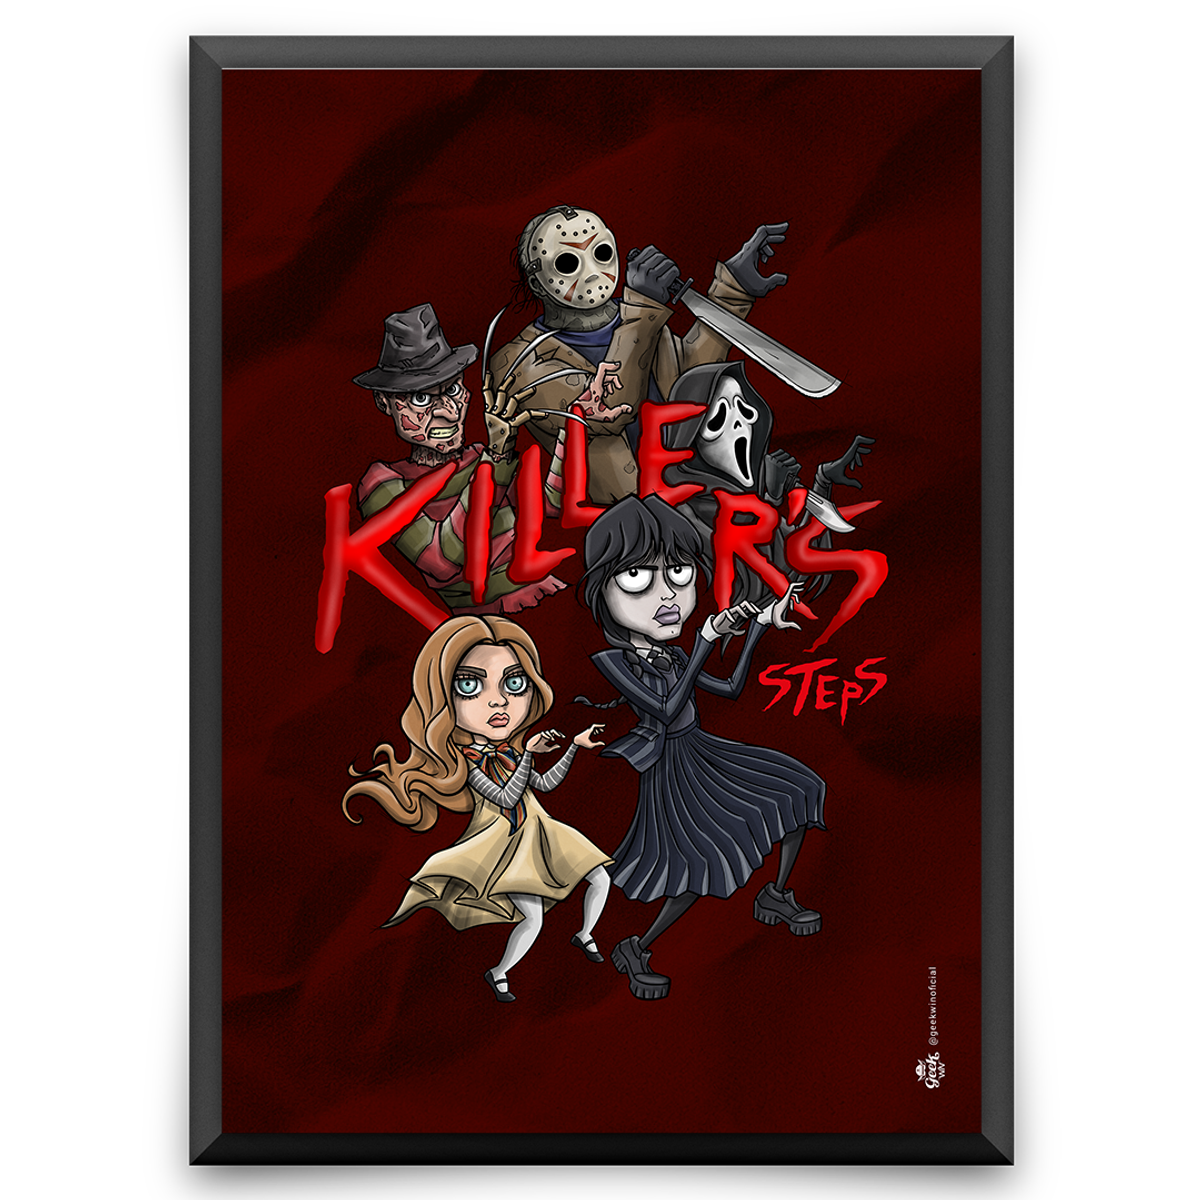 Nome do produto: Killers Steps<br>[Pôster]</br>